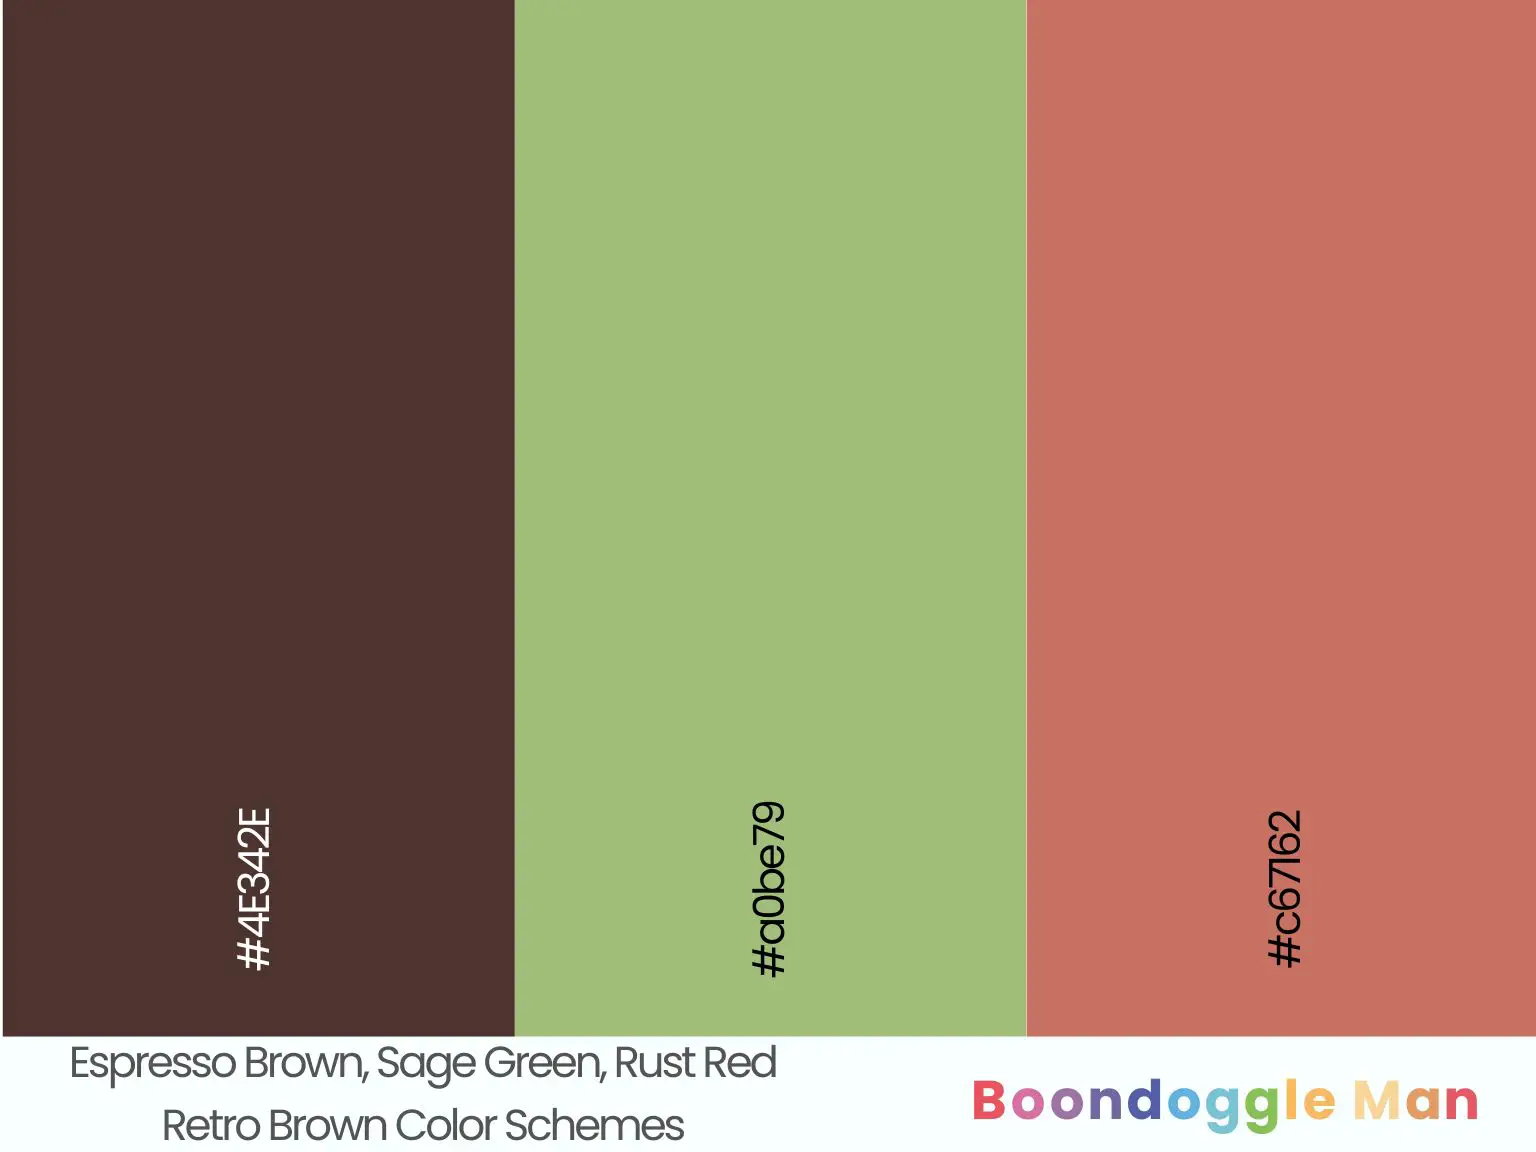 Espresso Brown, Sage Green, Rust Red